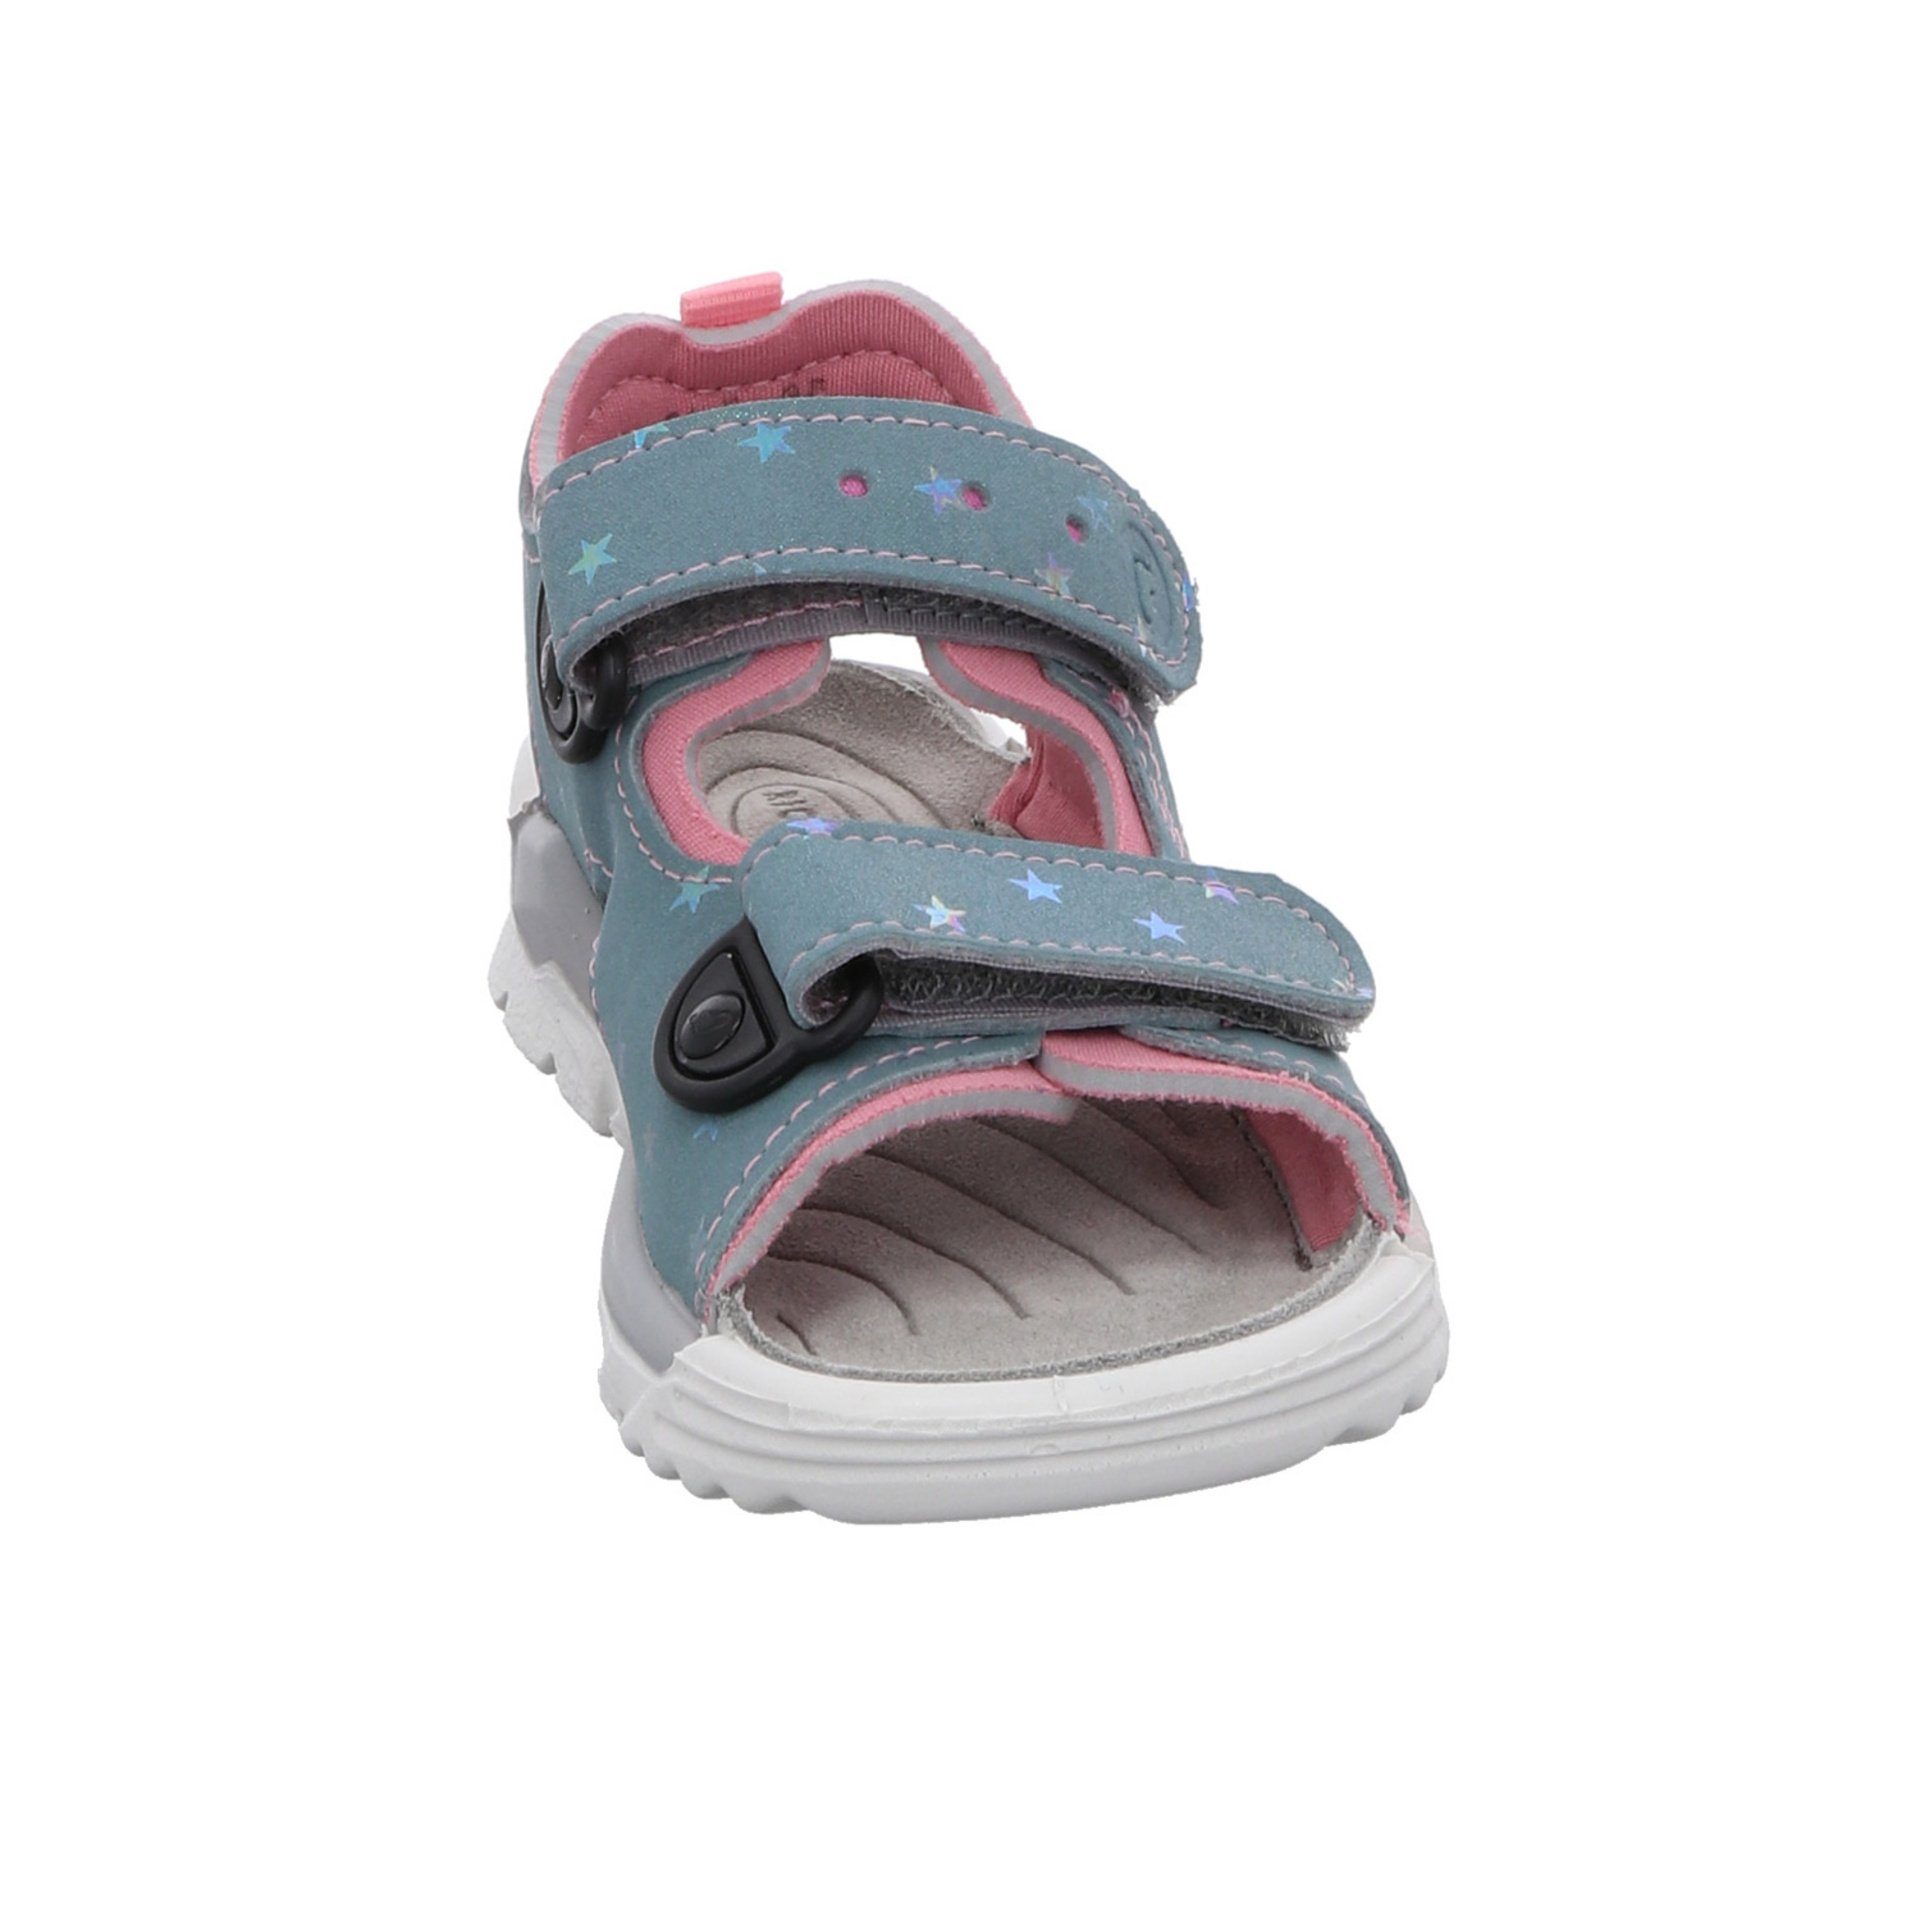 Ricosta Mädchen Kinderschuhe Schuhe (130) Sandale Sandale Synthetikkombination arctic/mallow Surf Sandalen